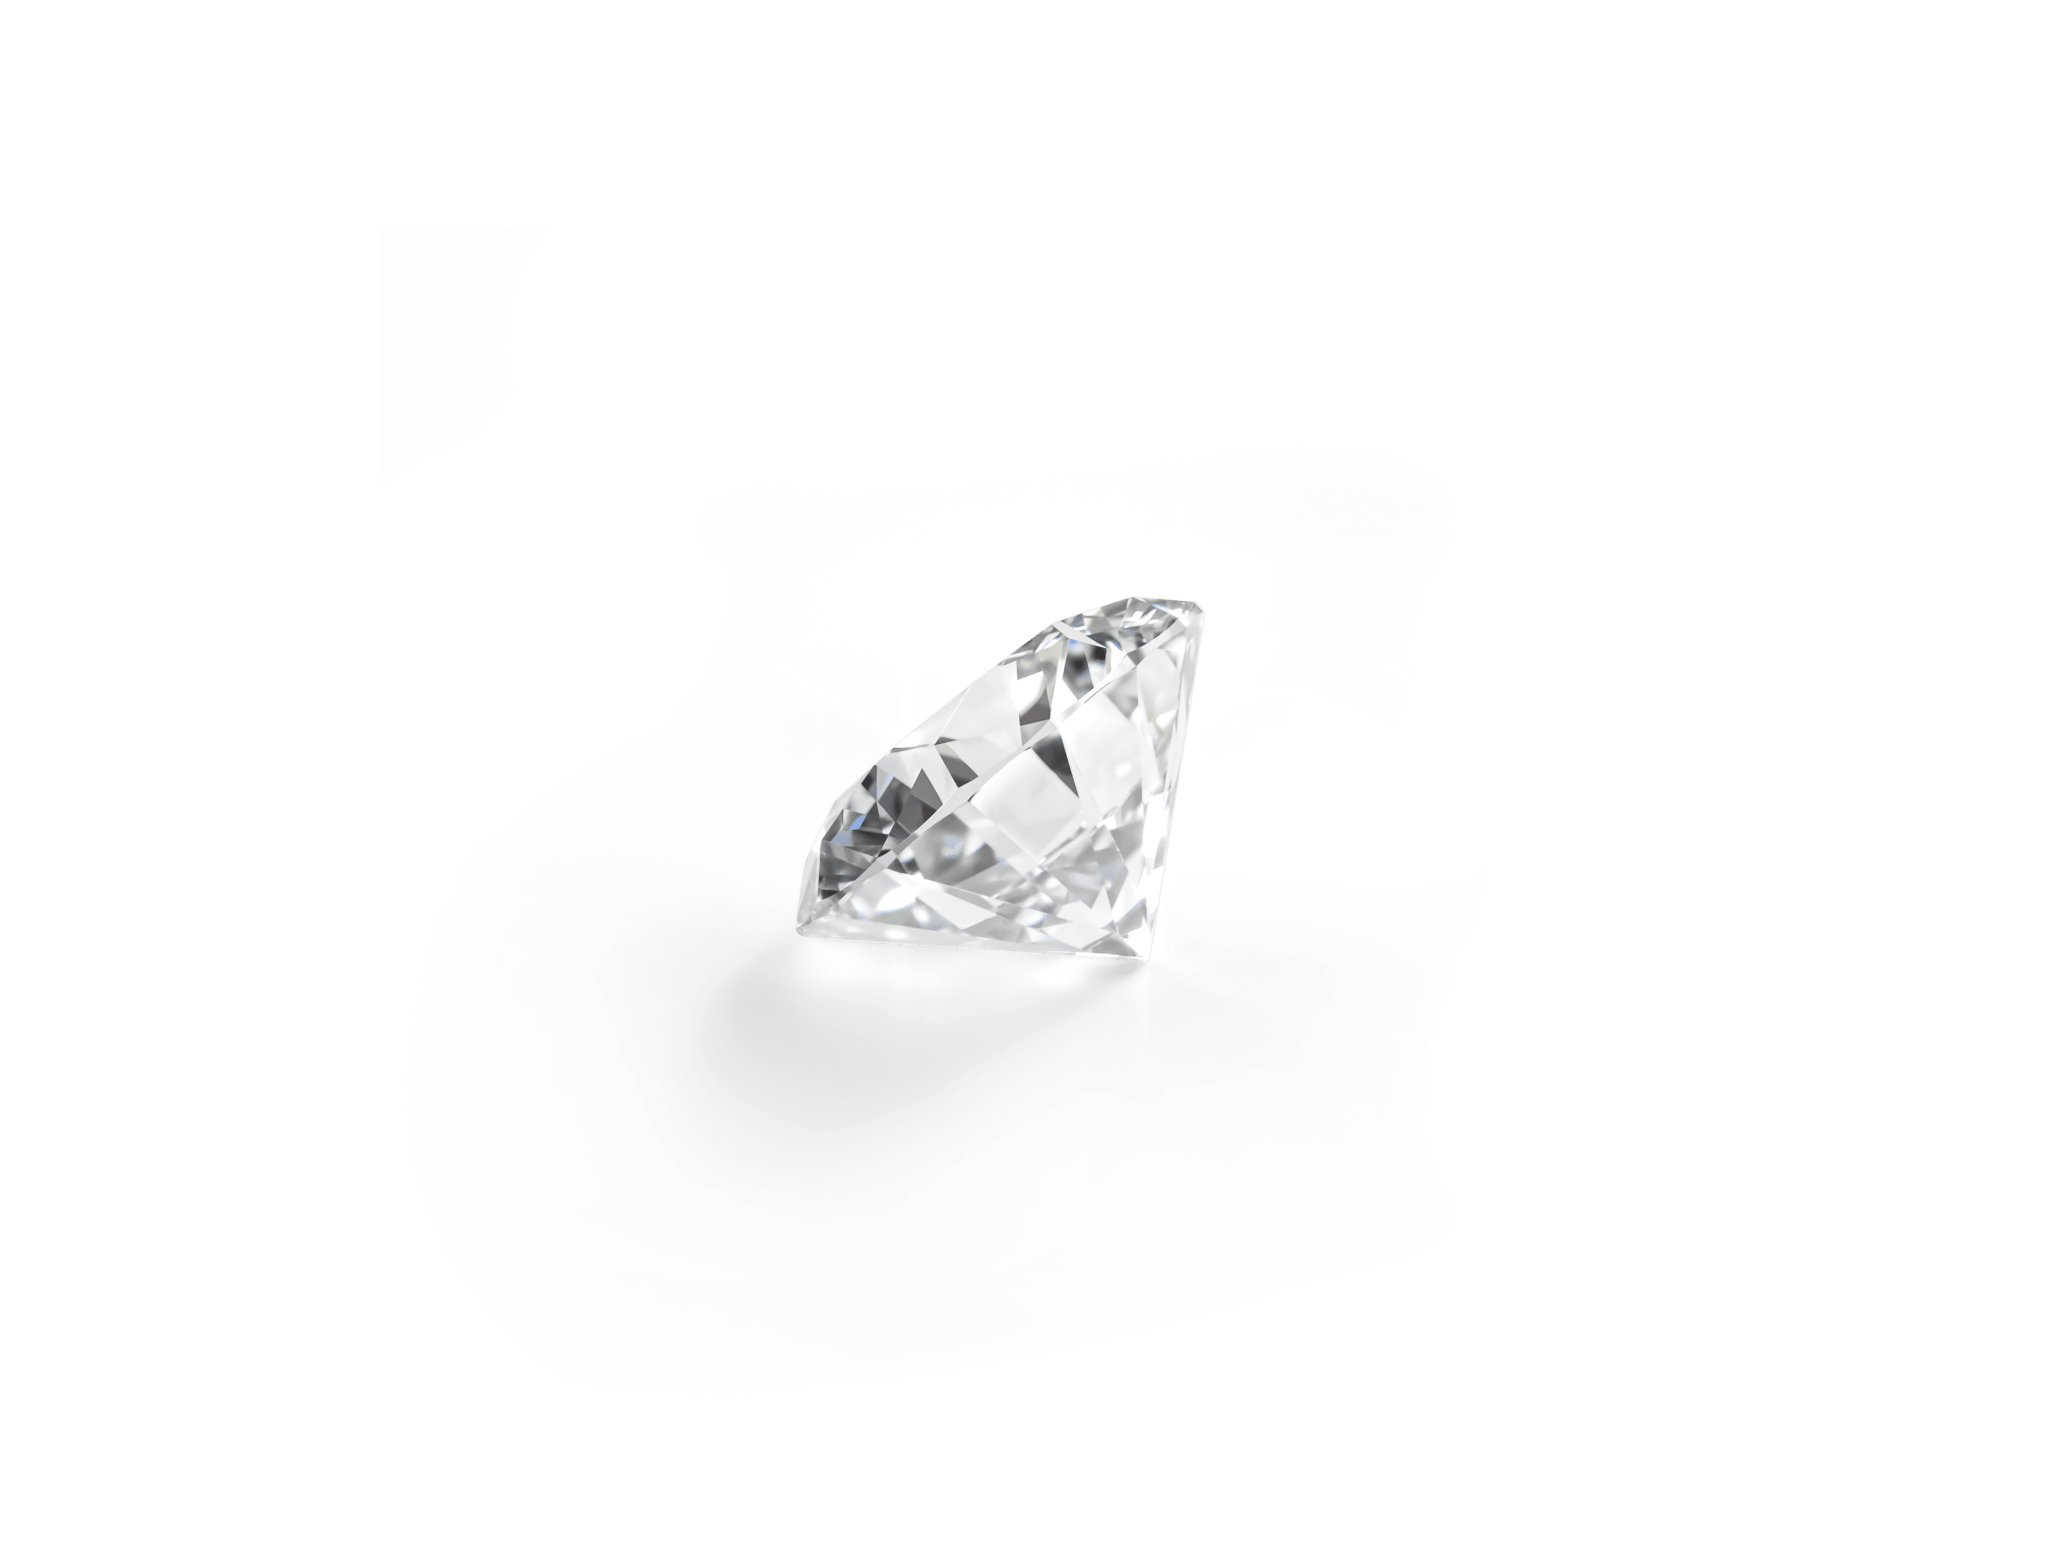 Finest Lab-Grown Loose 1¾ct. Round Brilliant Diamond | White - #Lightbox Jewelry#